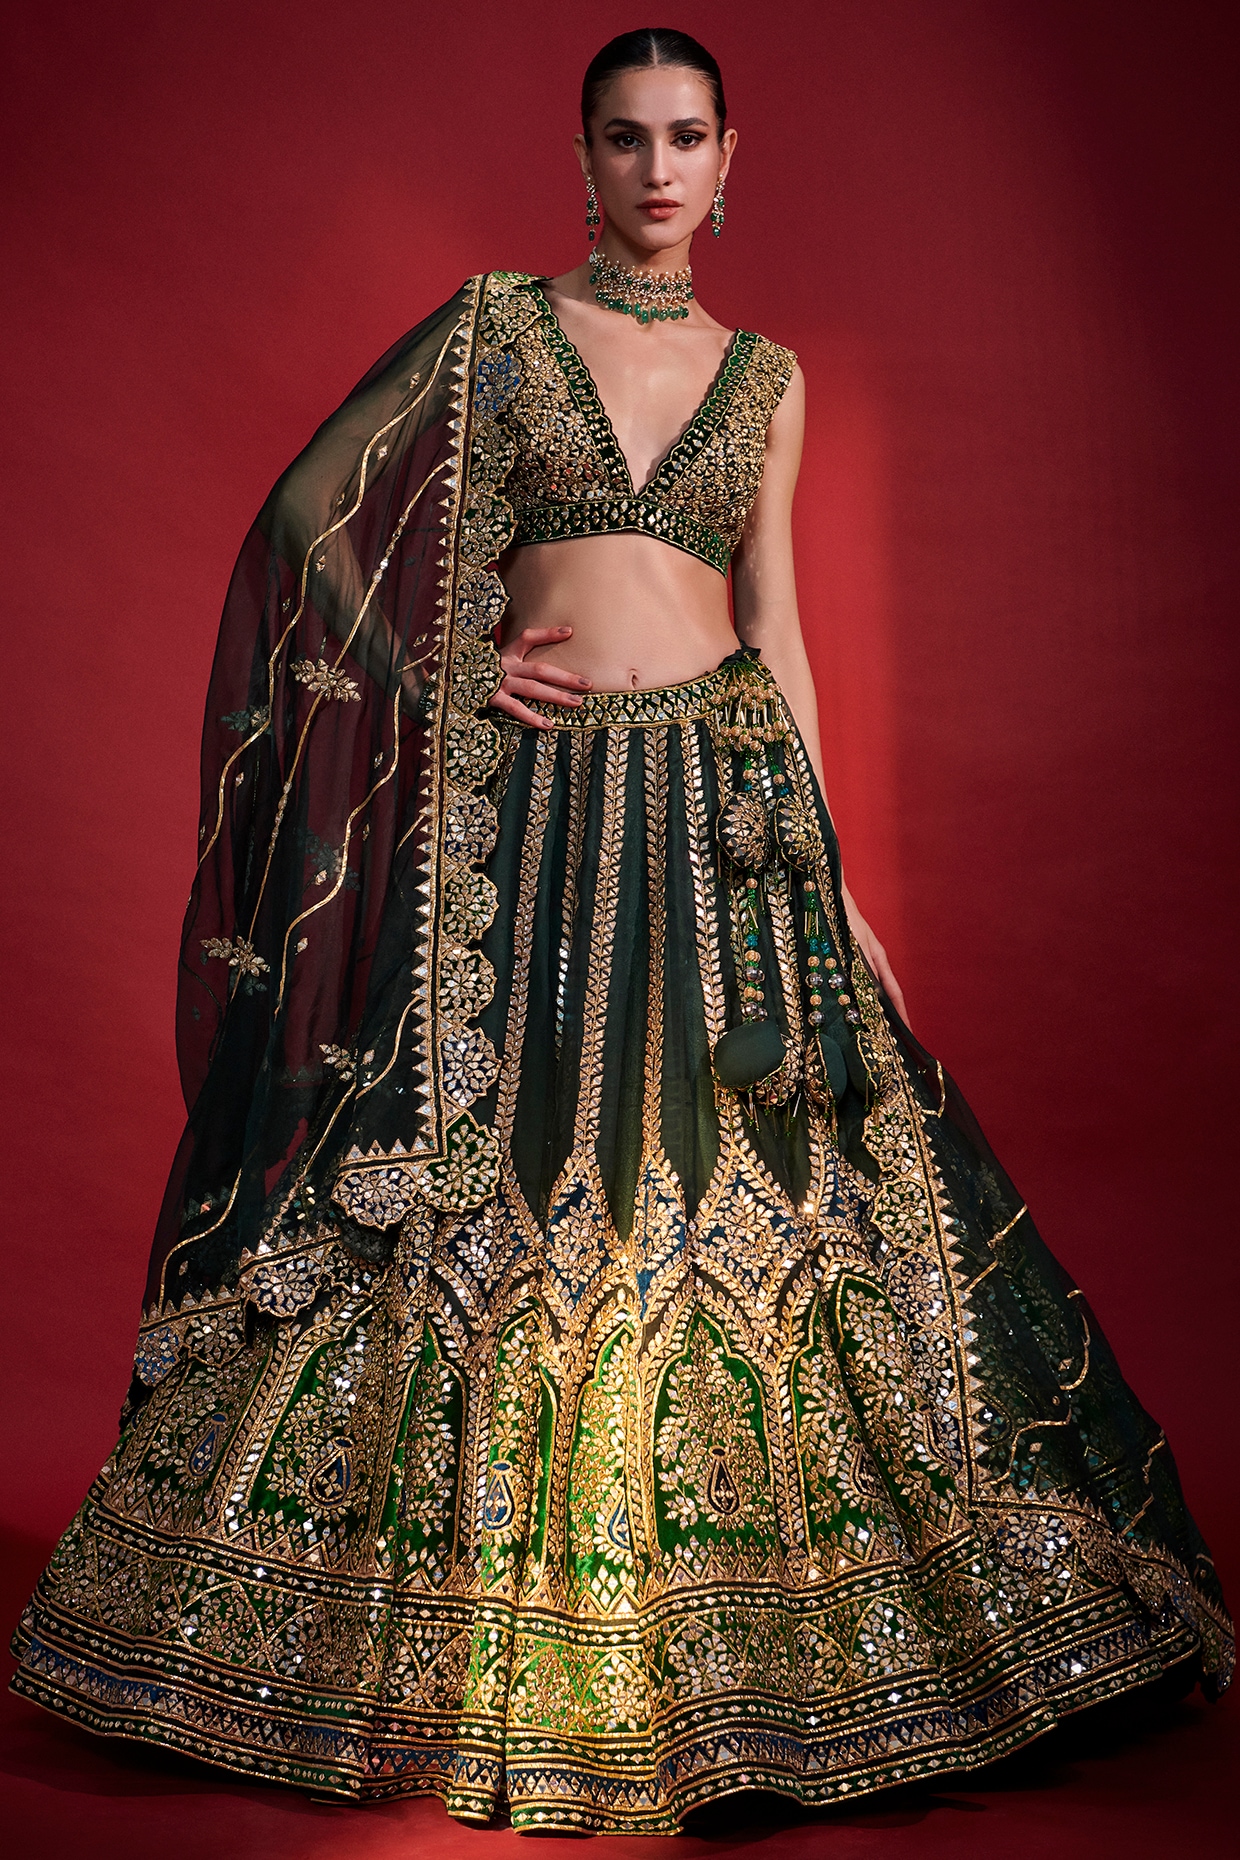 Premium Photo | 3YearOld Indian Princess in Emerald Green and Gold Lehenga  Dress Resplendent Beauty